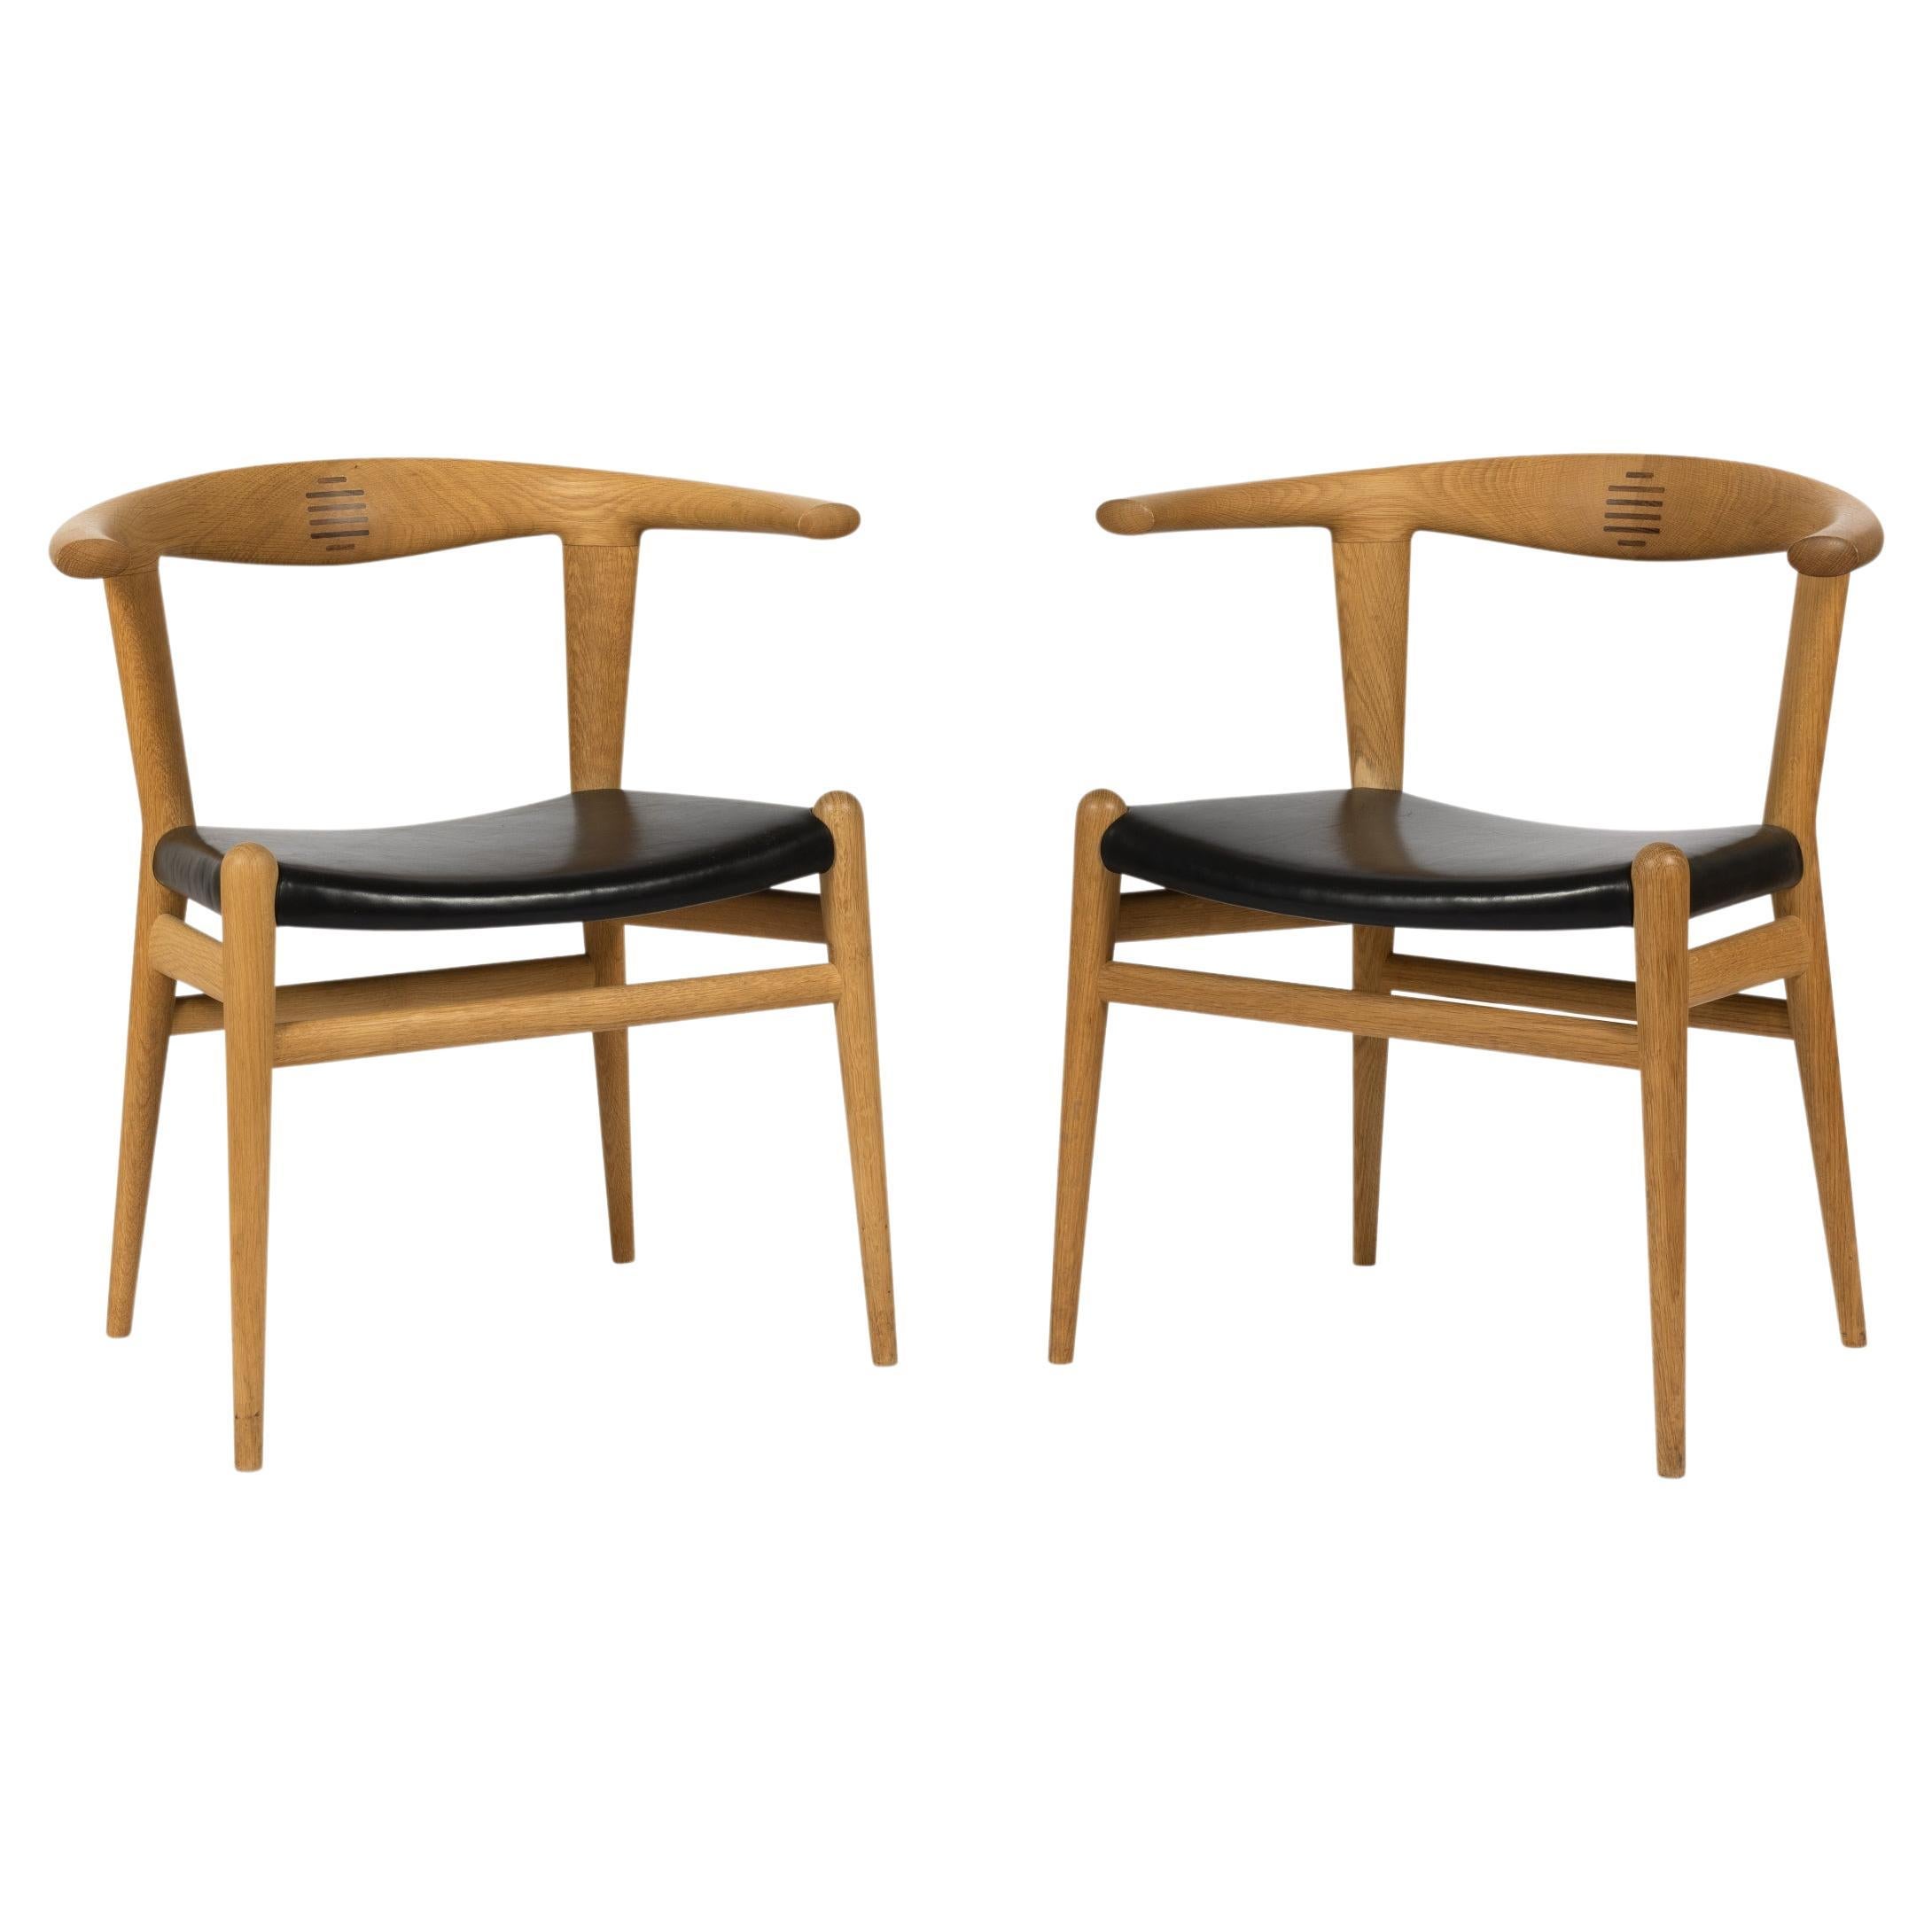 Paare von Liegestühlen 'Bull Chair', Modell PP-518, En Chêne Massif, Hans J. Wegner